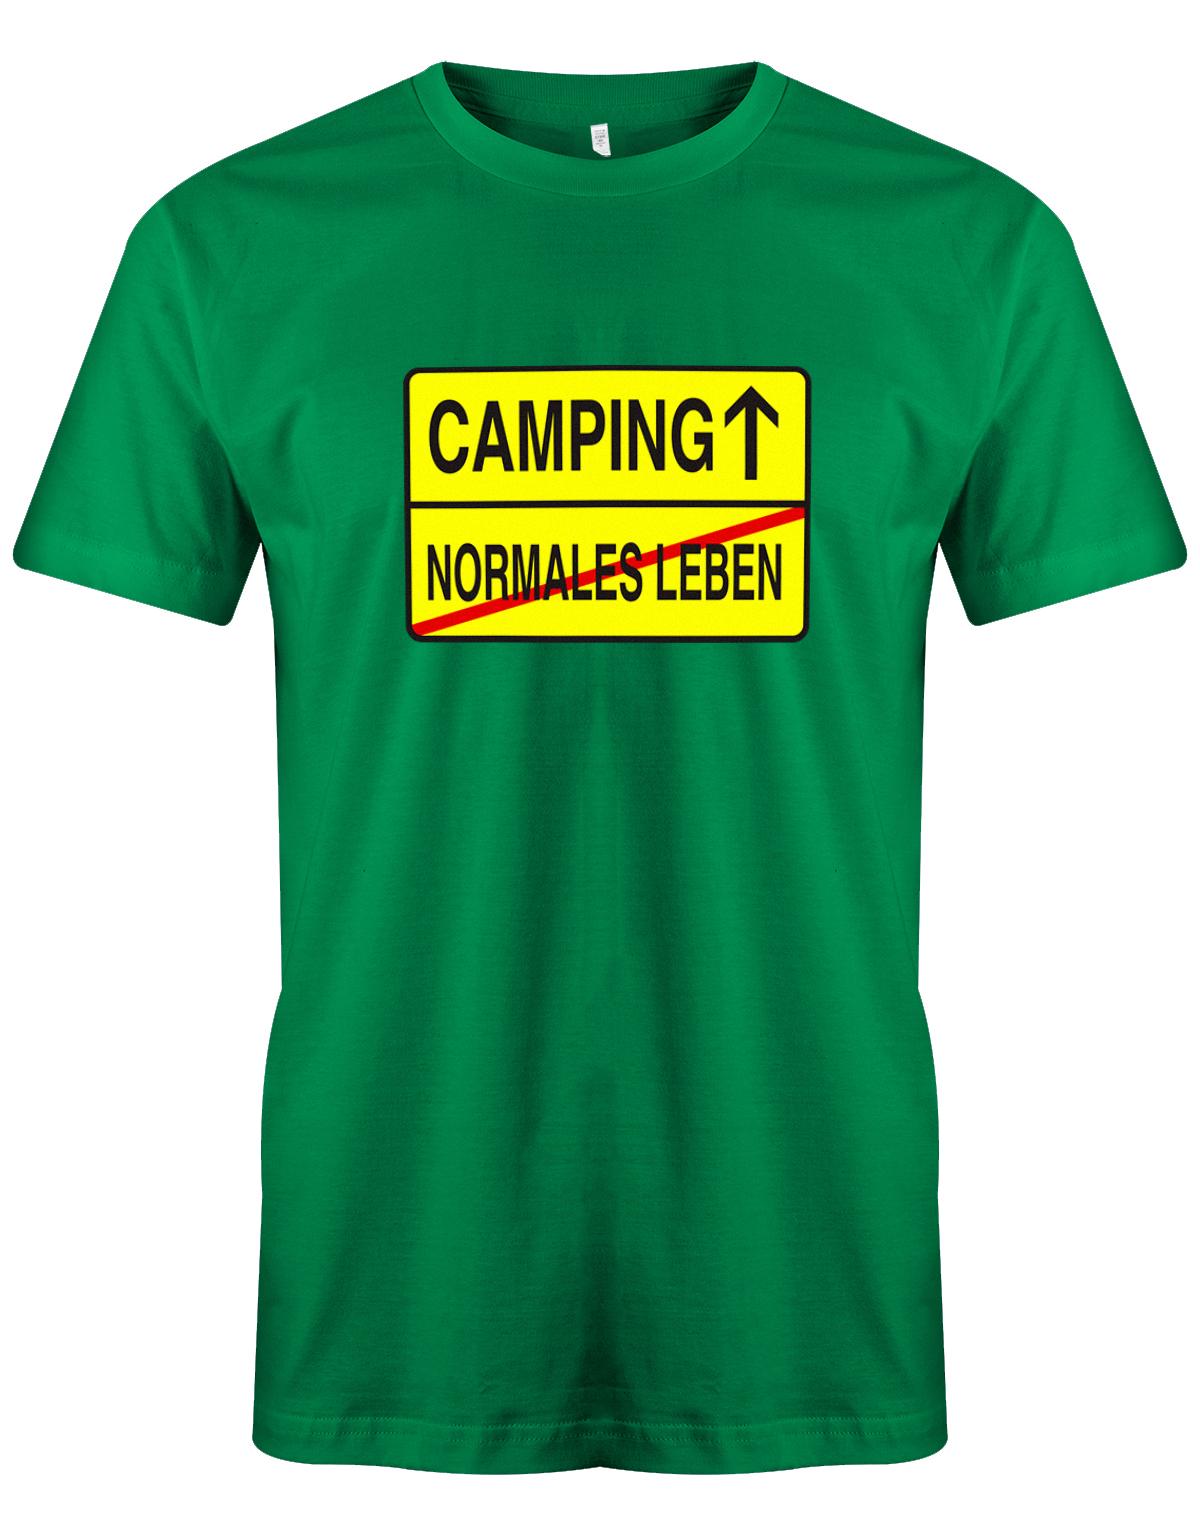 Camping-Normales-leben-Ortschild-herren-Camping-Shirt-Gr-n